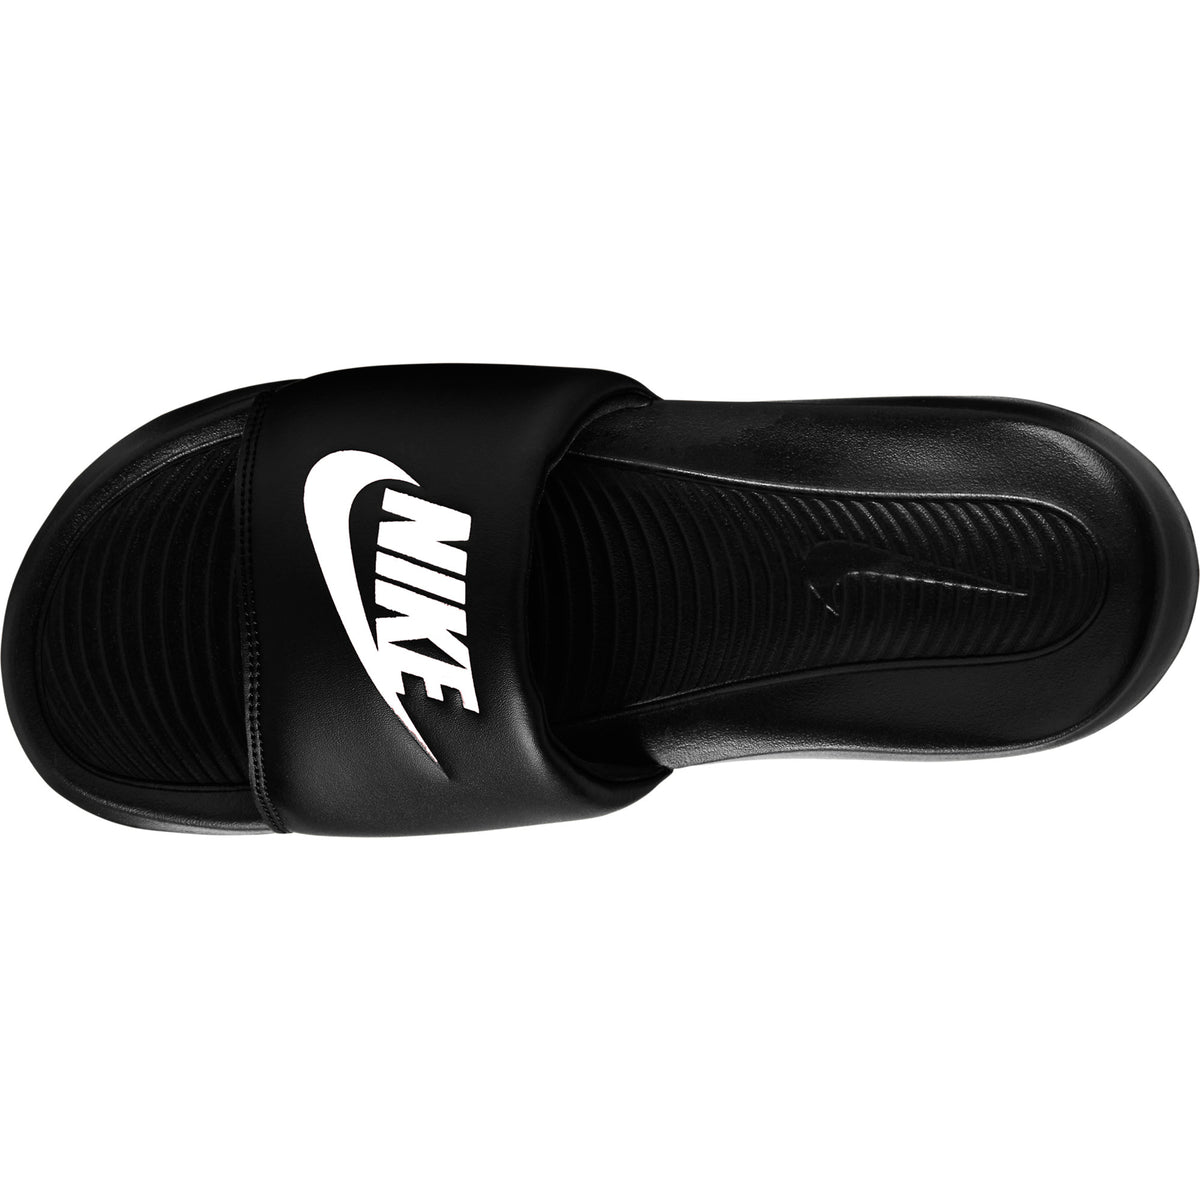 Chancletas Nike Victori One de Hombre color Negro